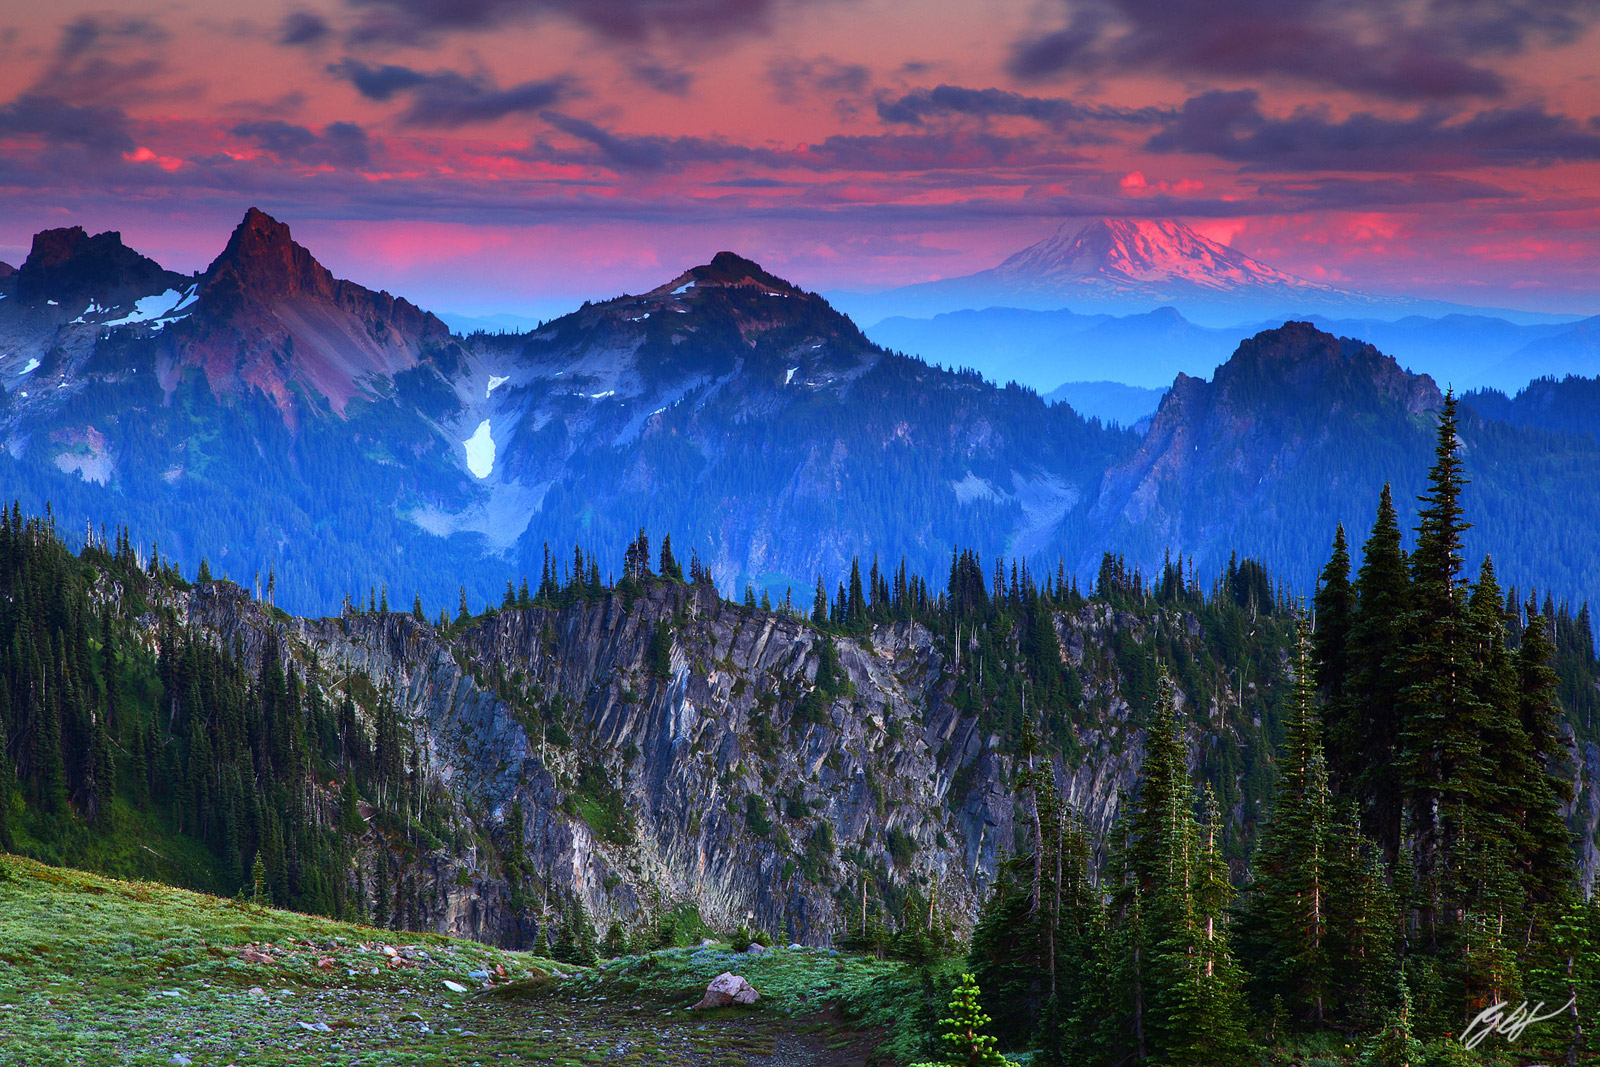 Sunset Mt Adams Viewed Through the Tatoosh Range from Mt Rainier National Park in Washington